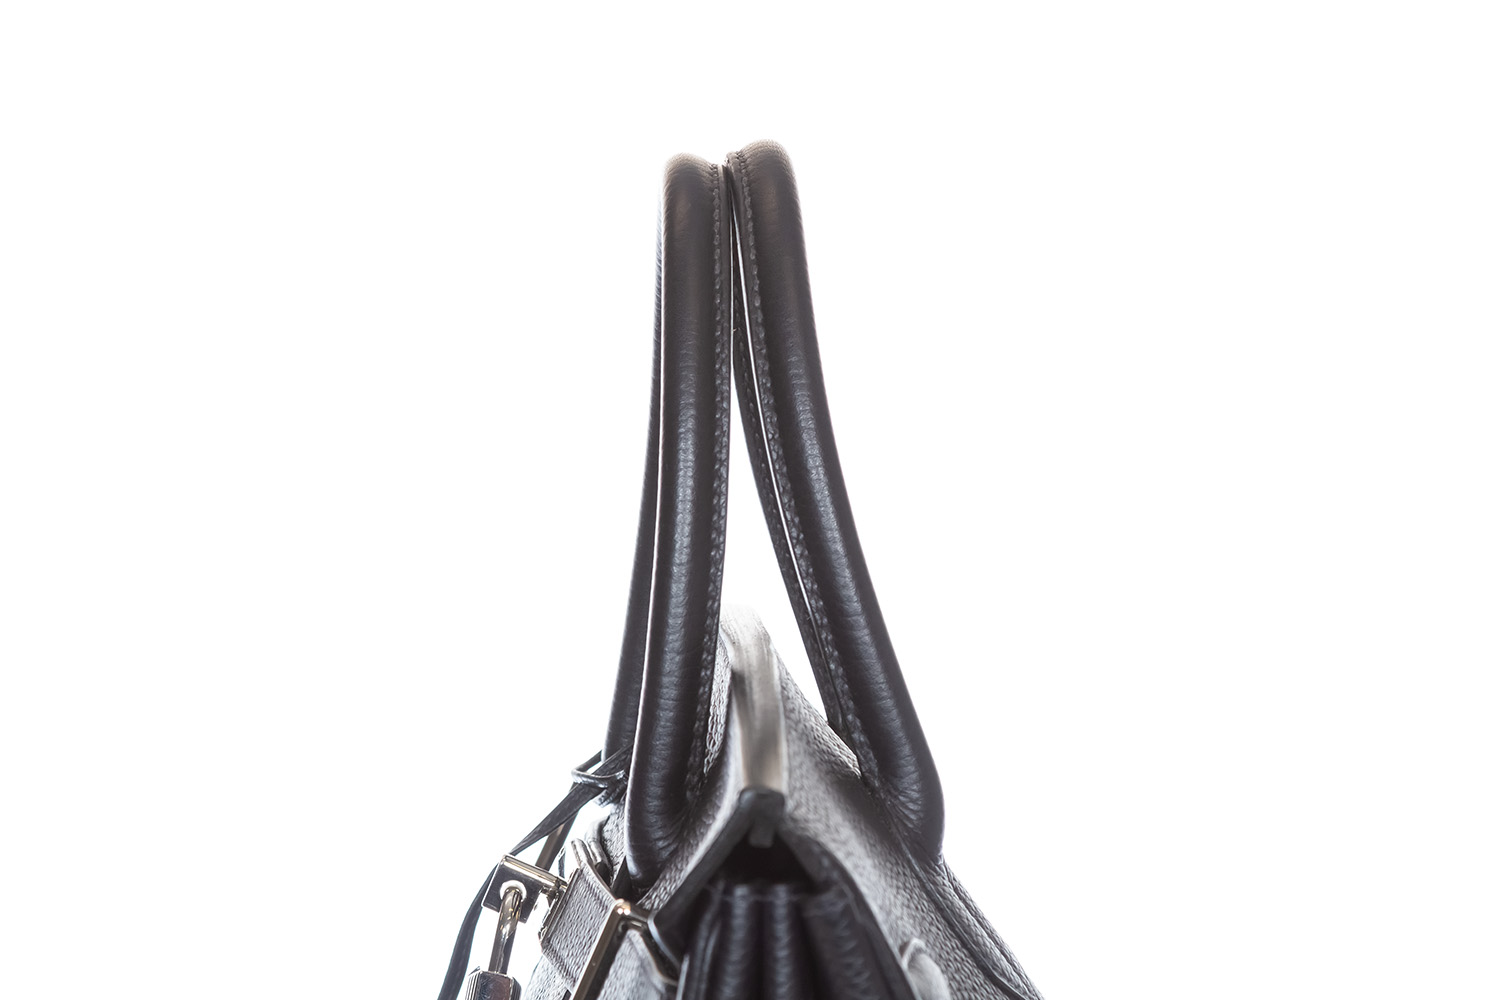 Hermès Birkin Handbag 392364